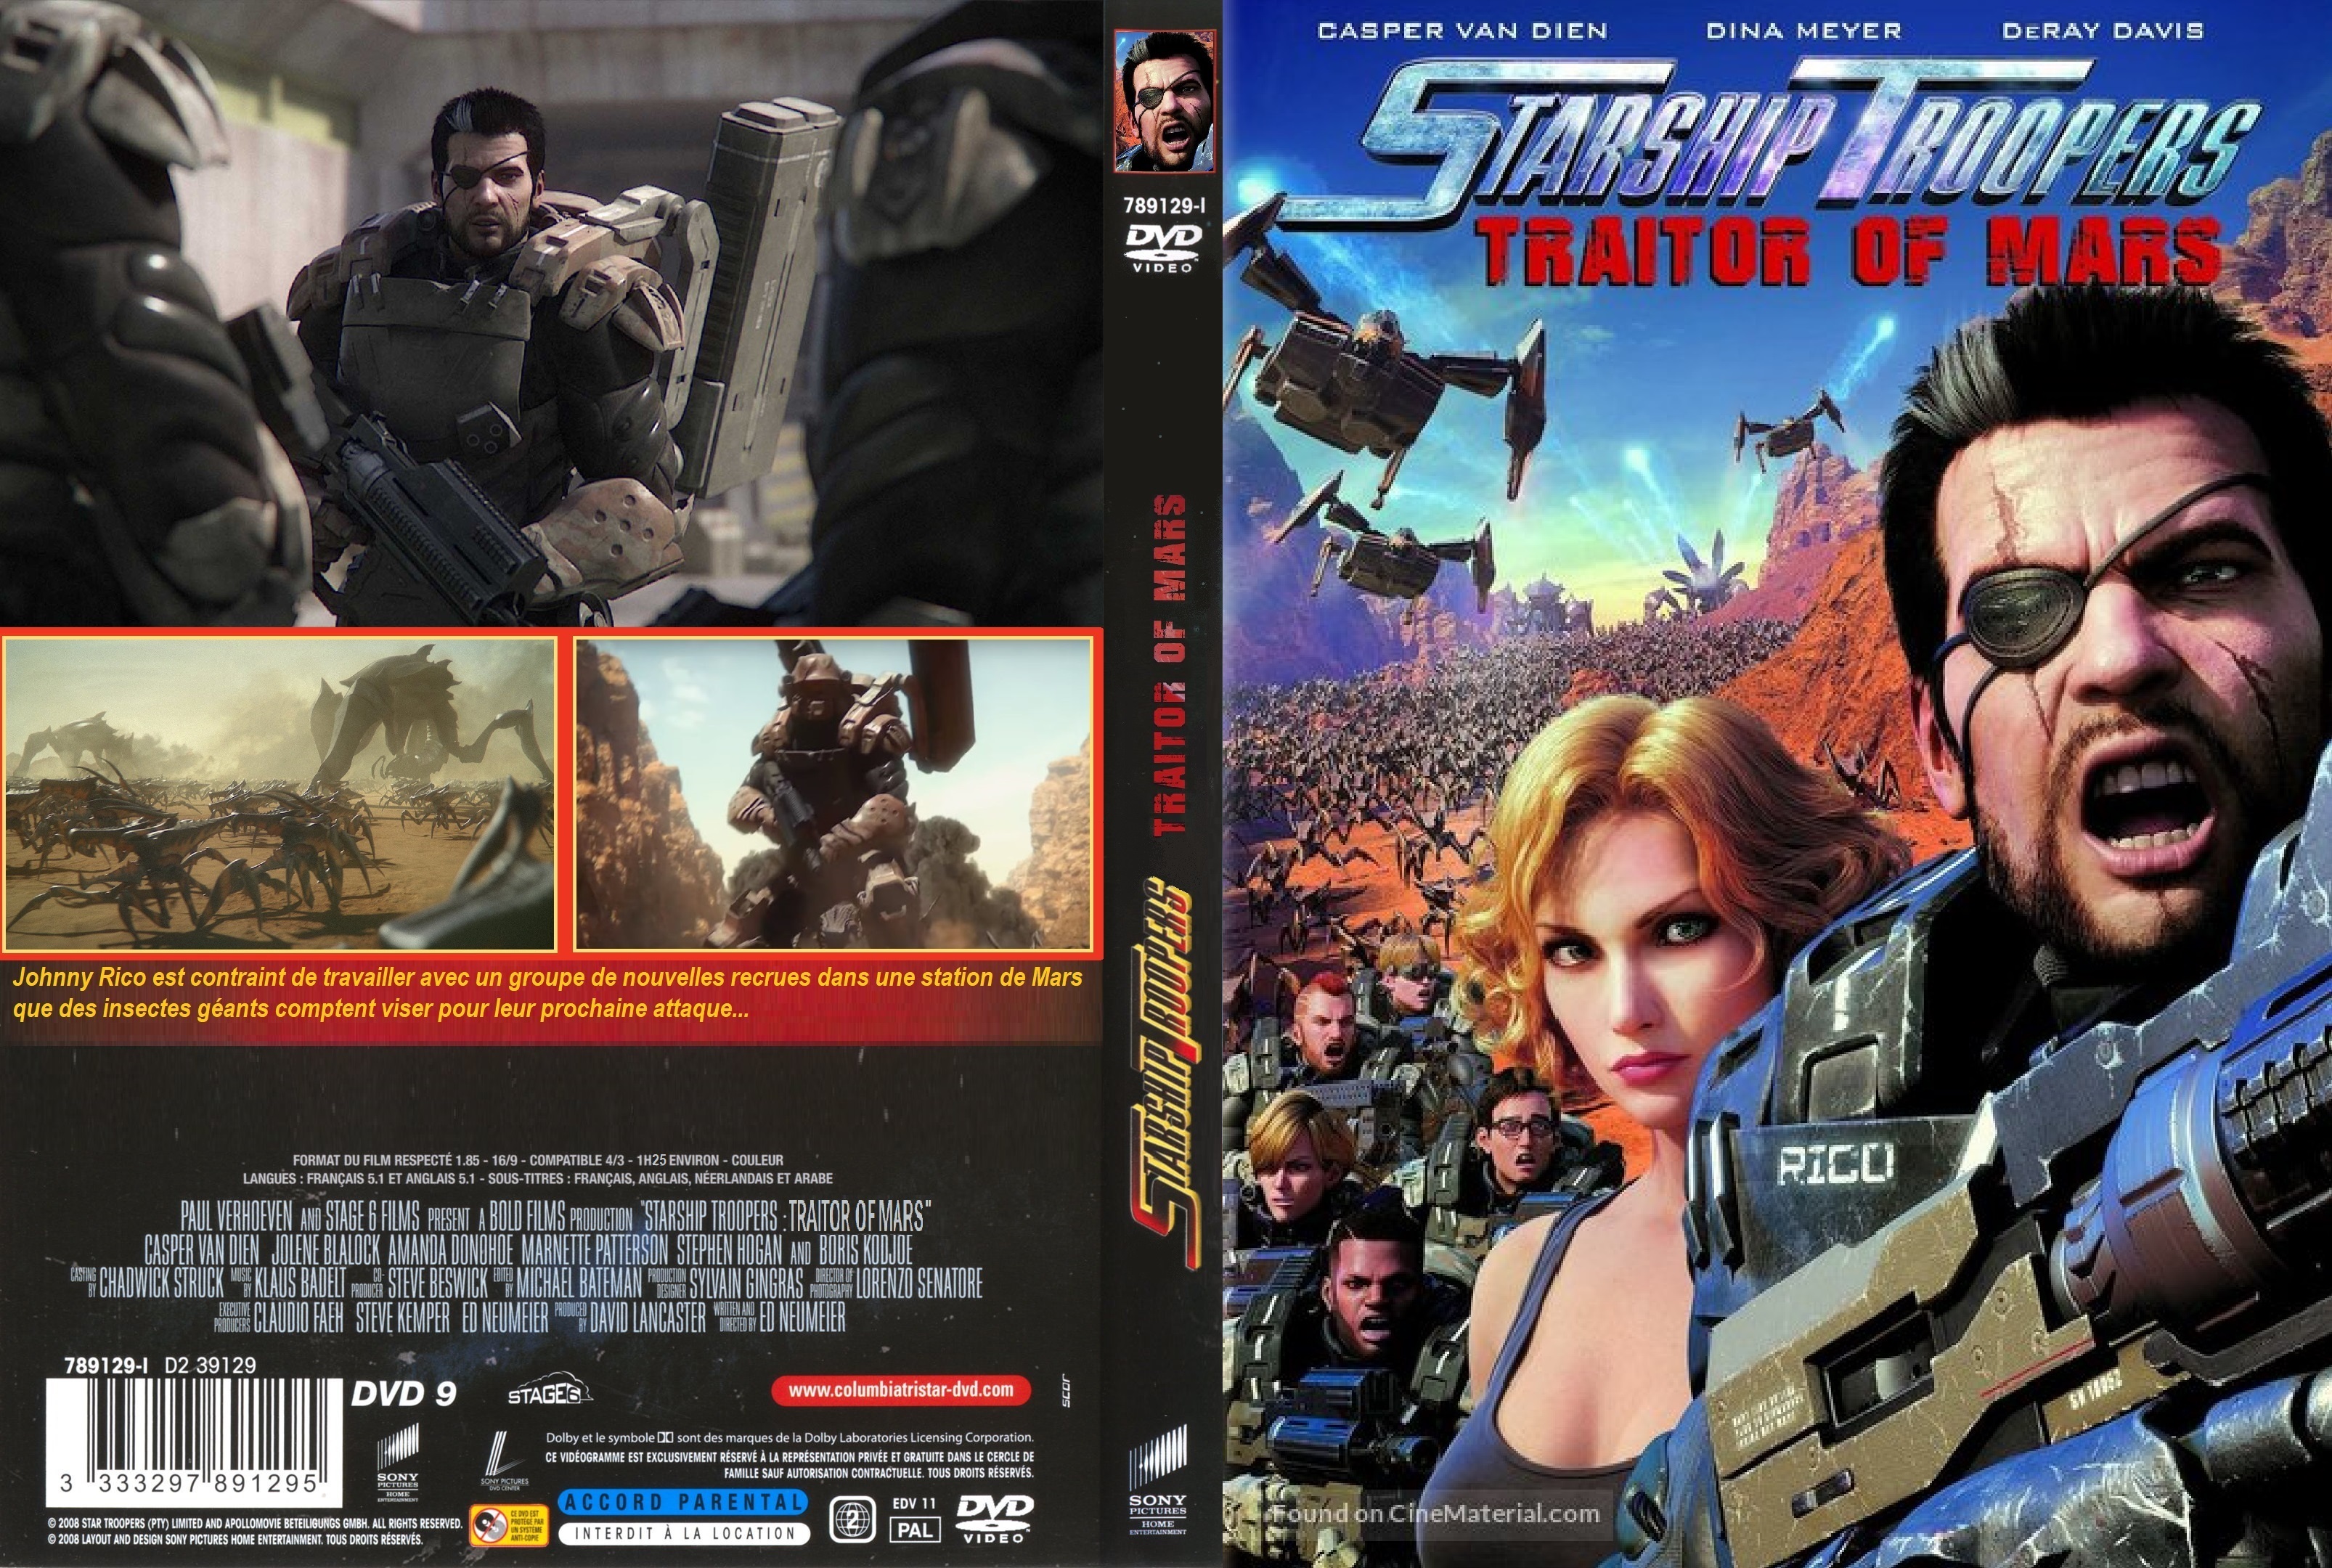 Jaquette DVD Starship troopers Traitor of Mars custom